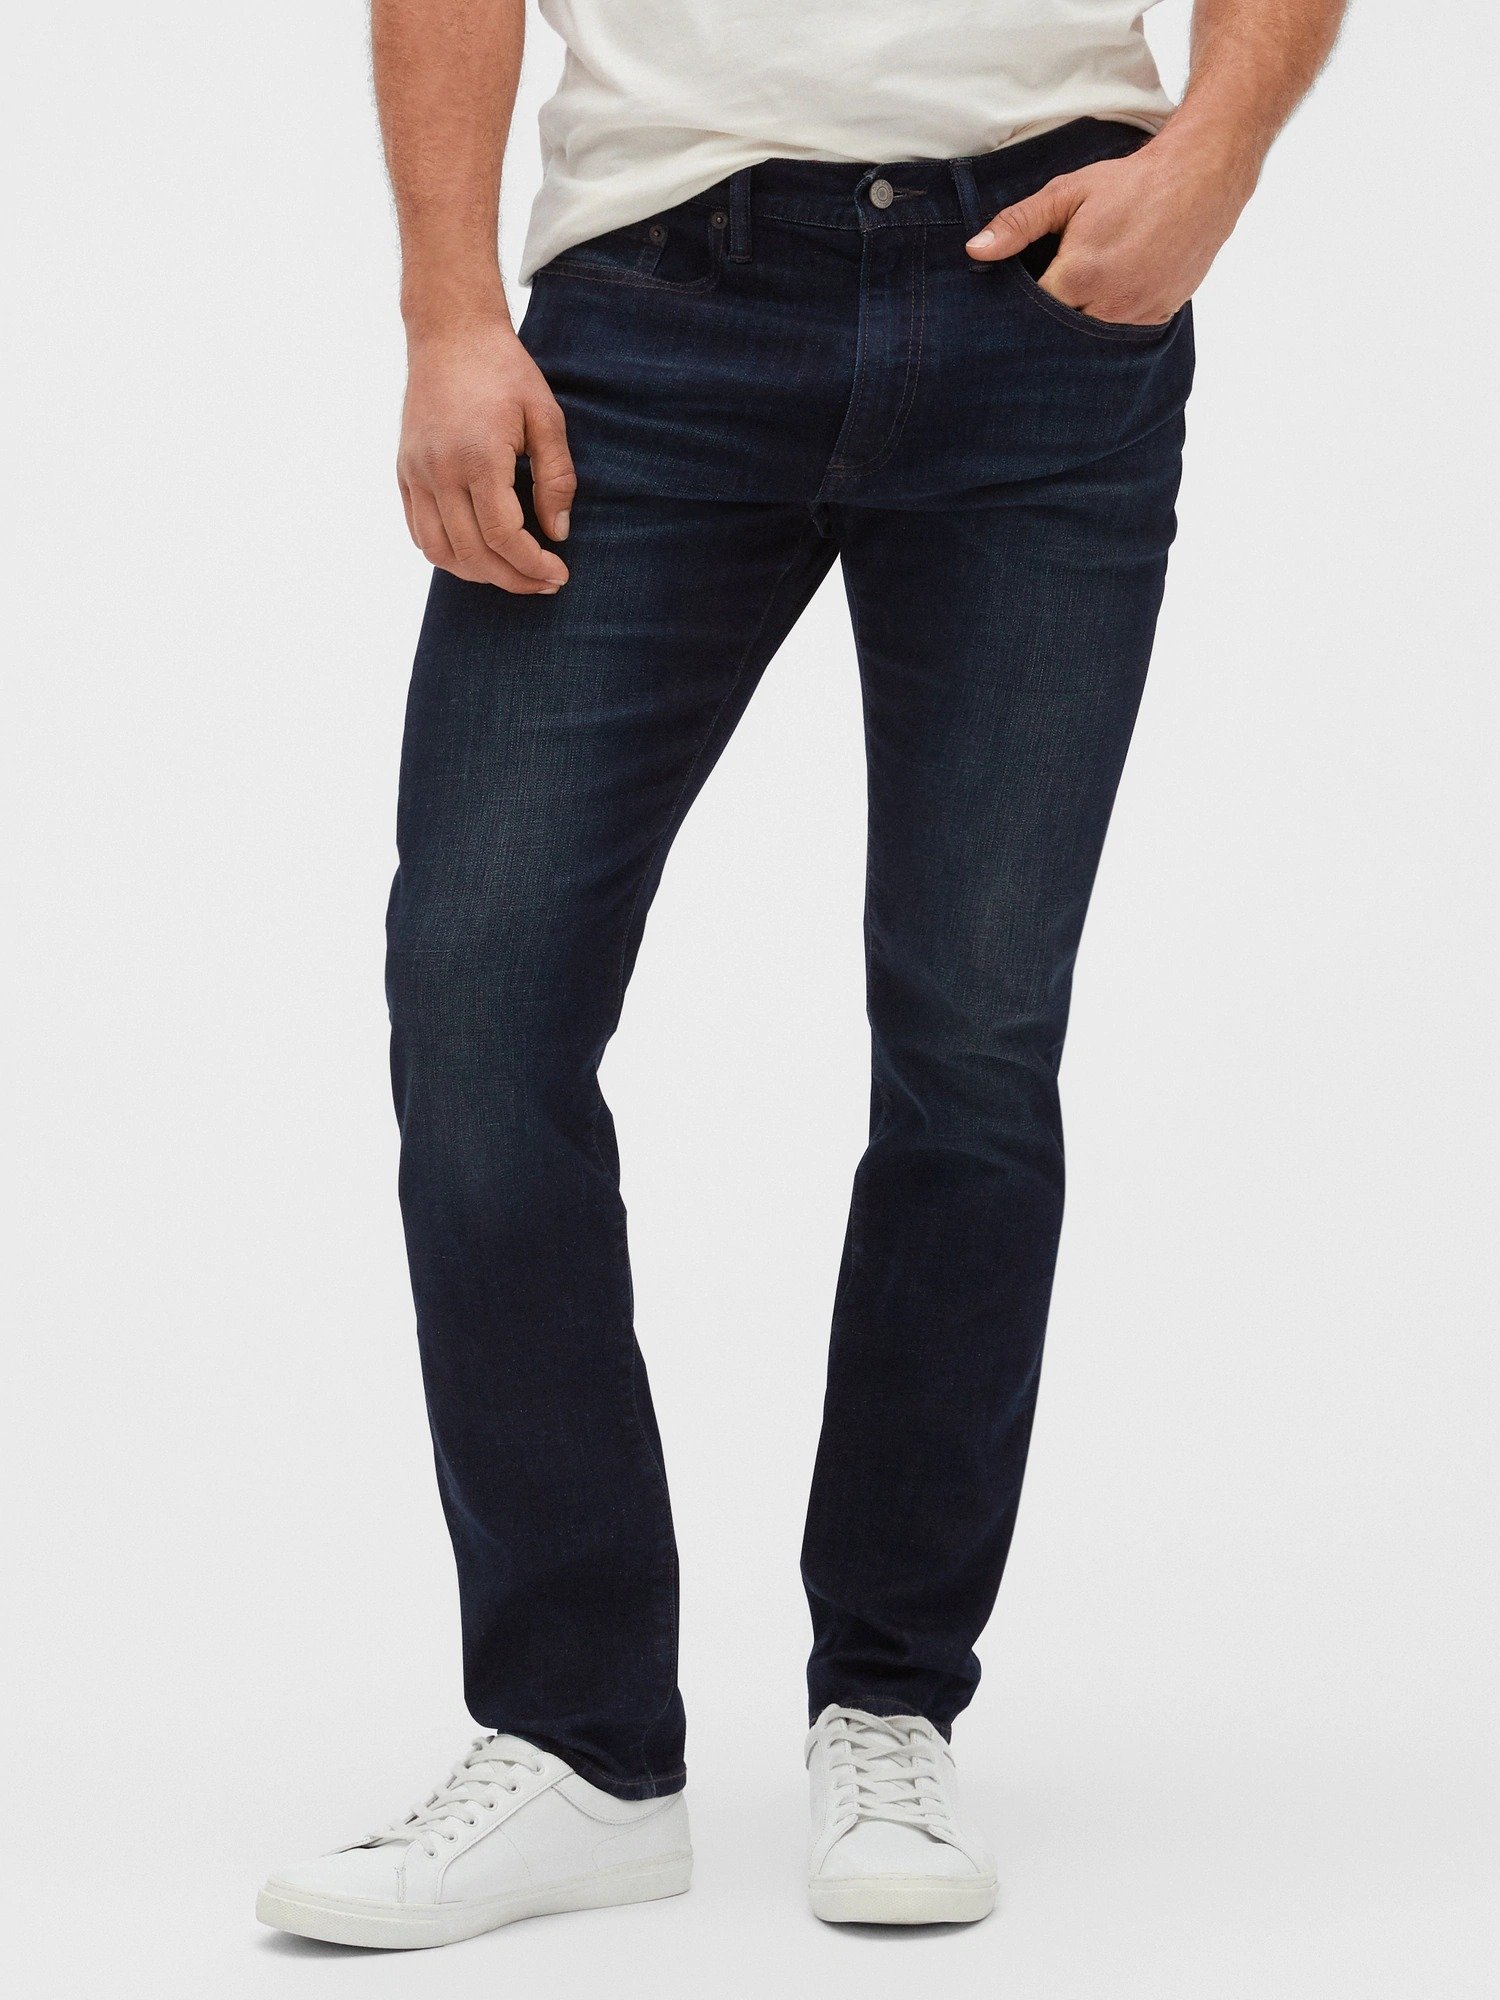 Slim Fit Jean product image